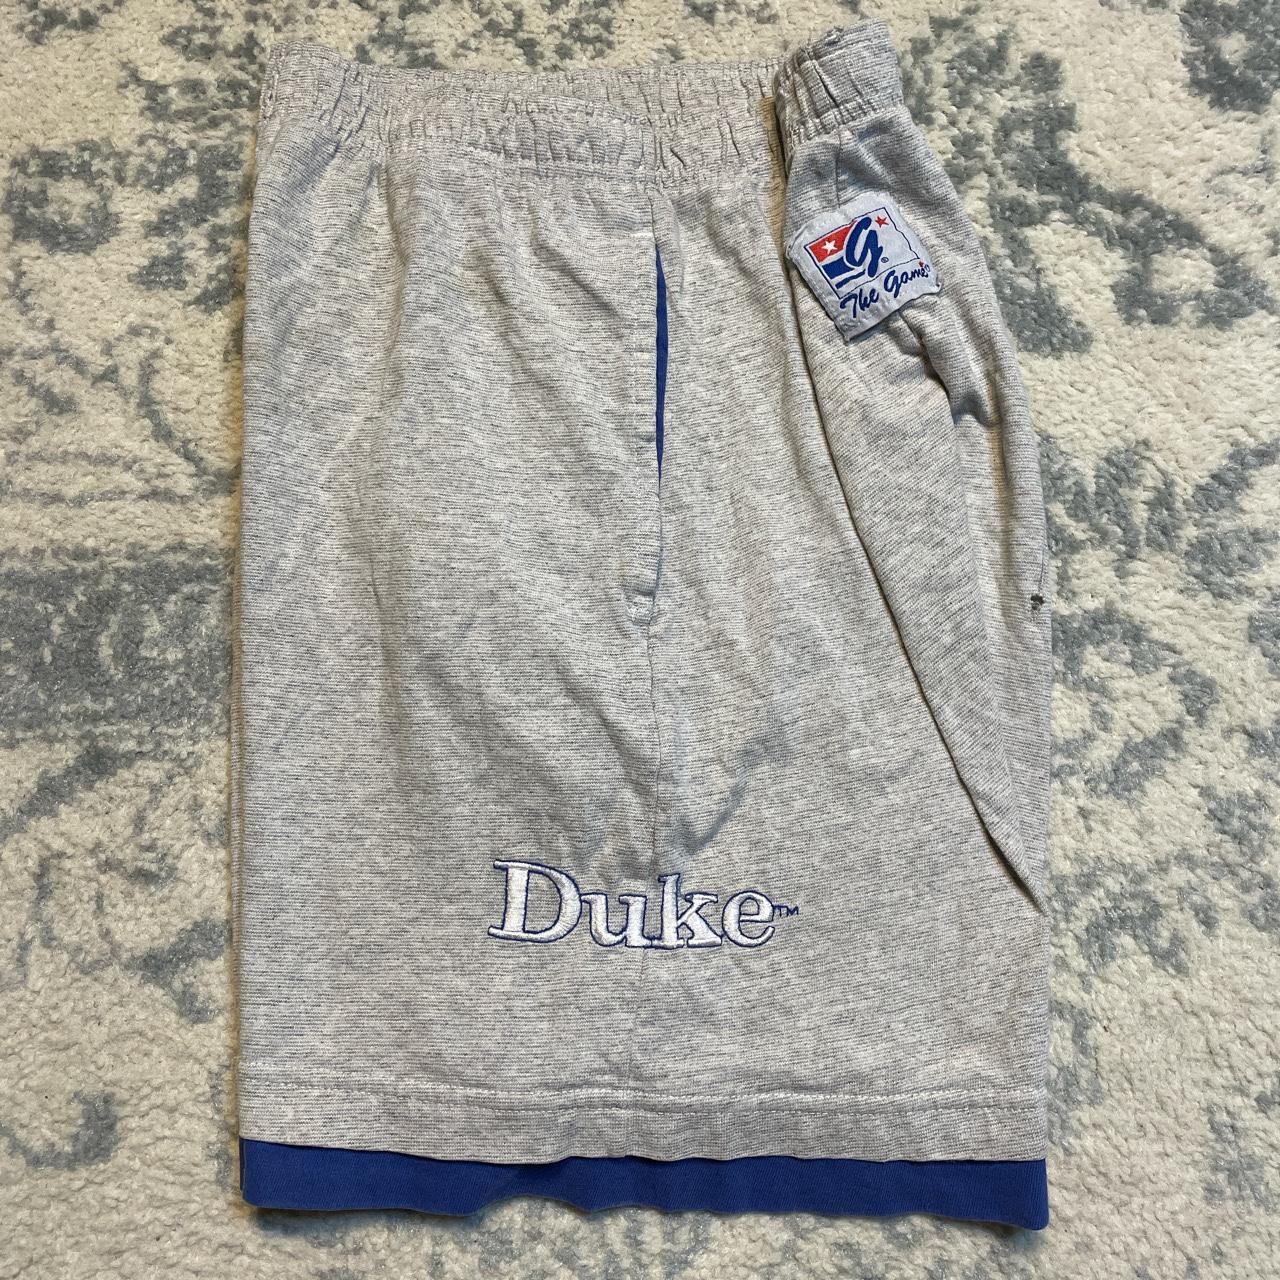 Duke Men's Grey and Blue Shorts